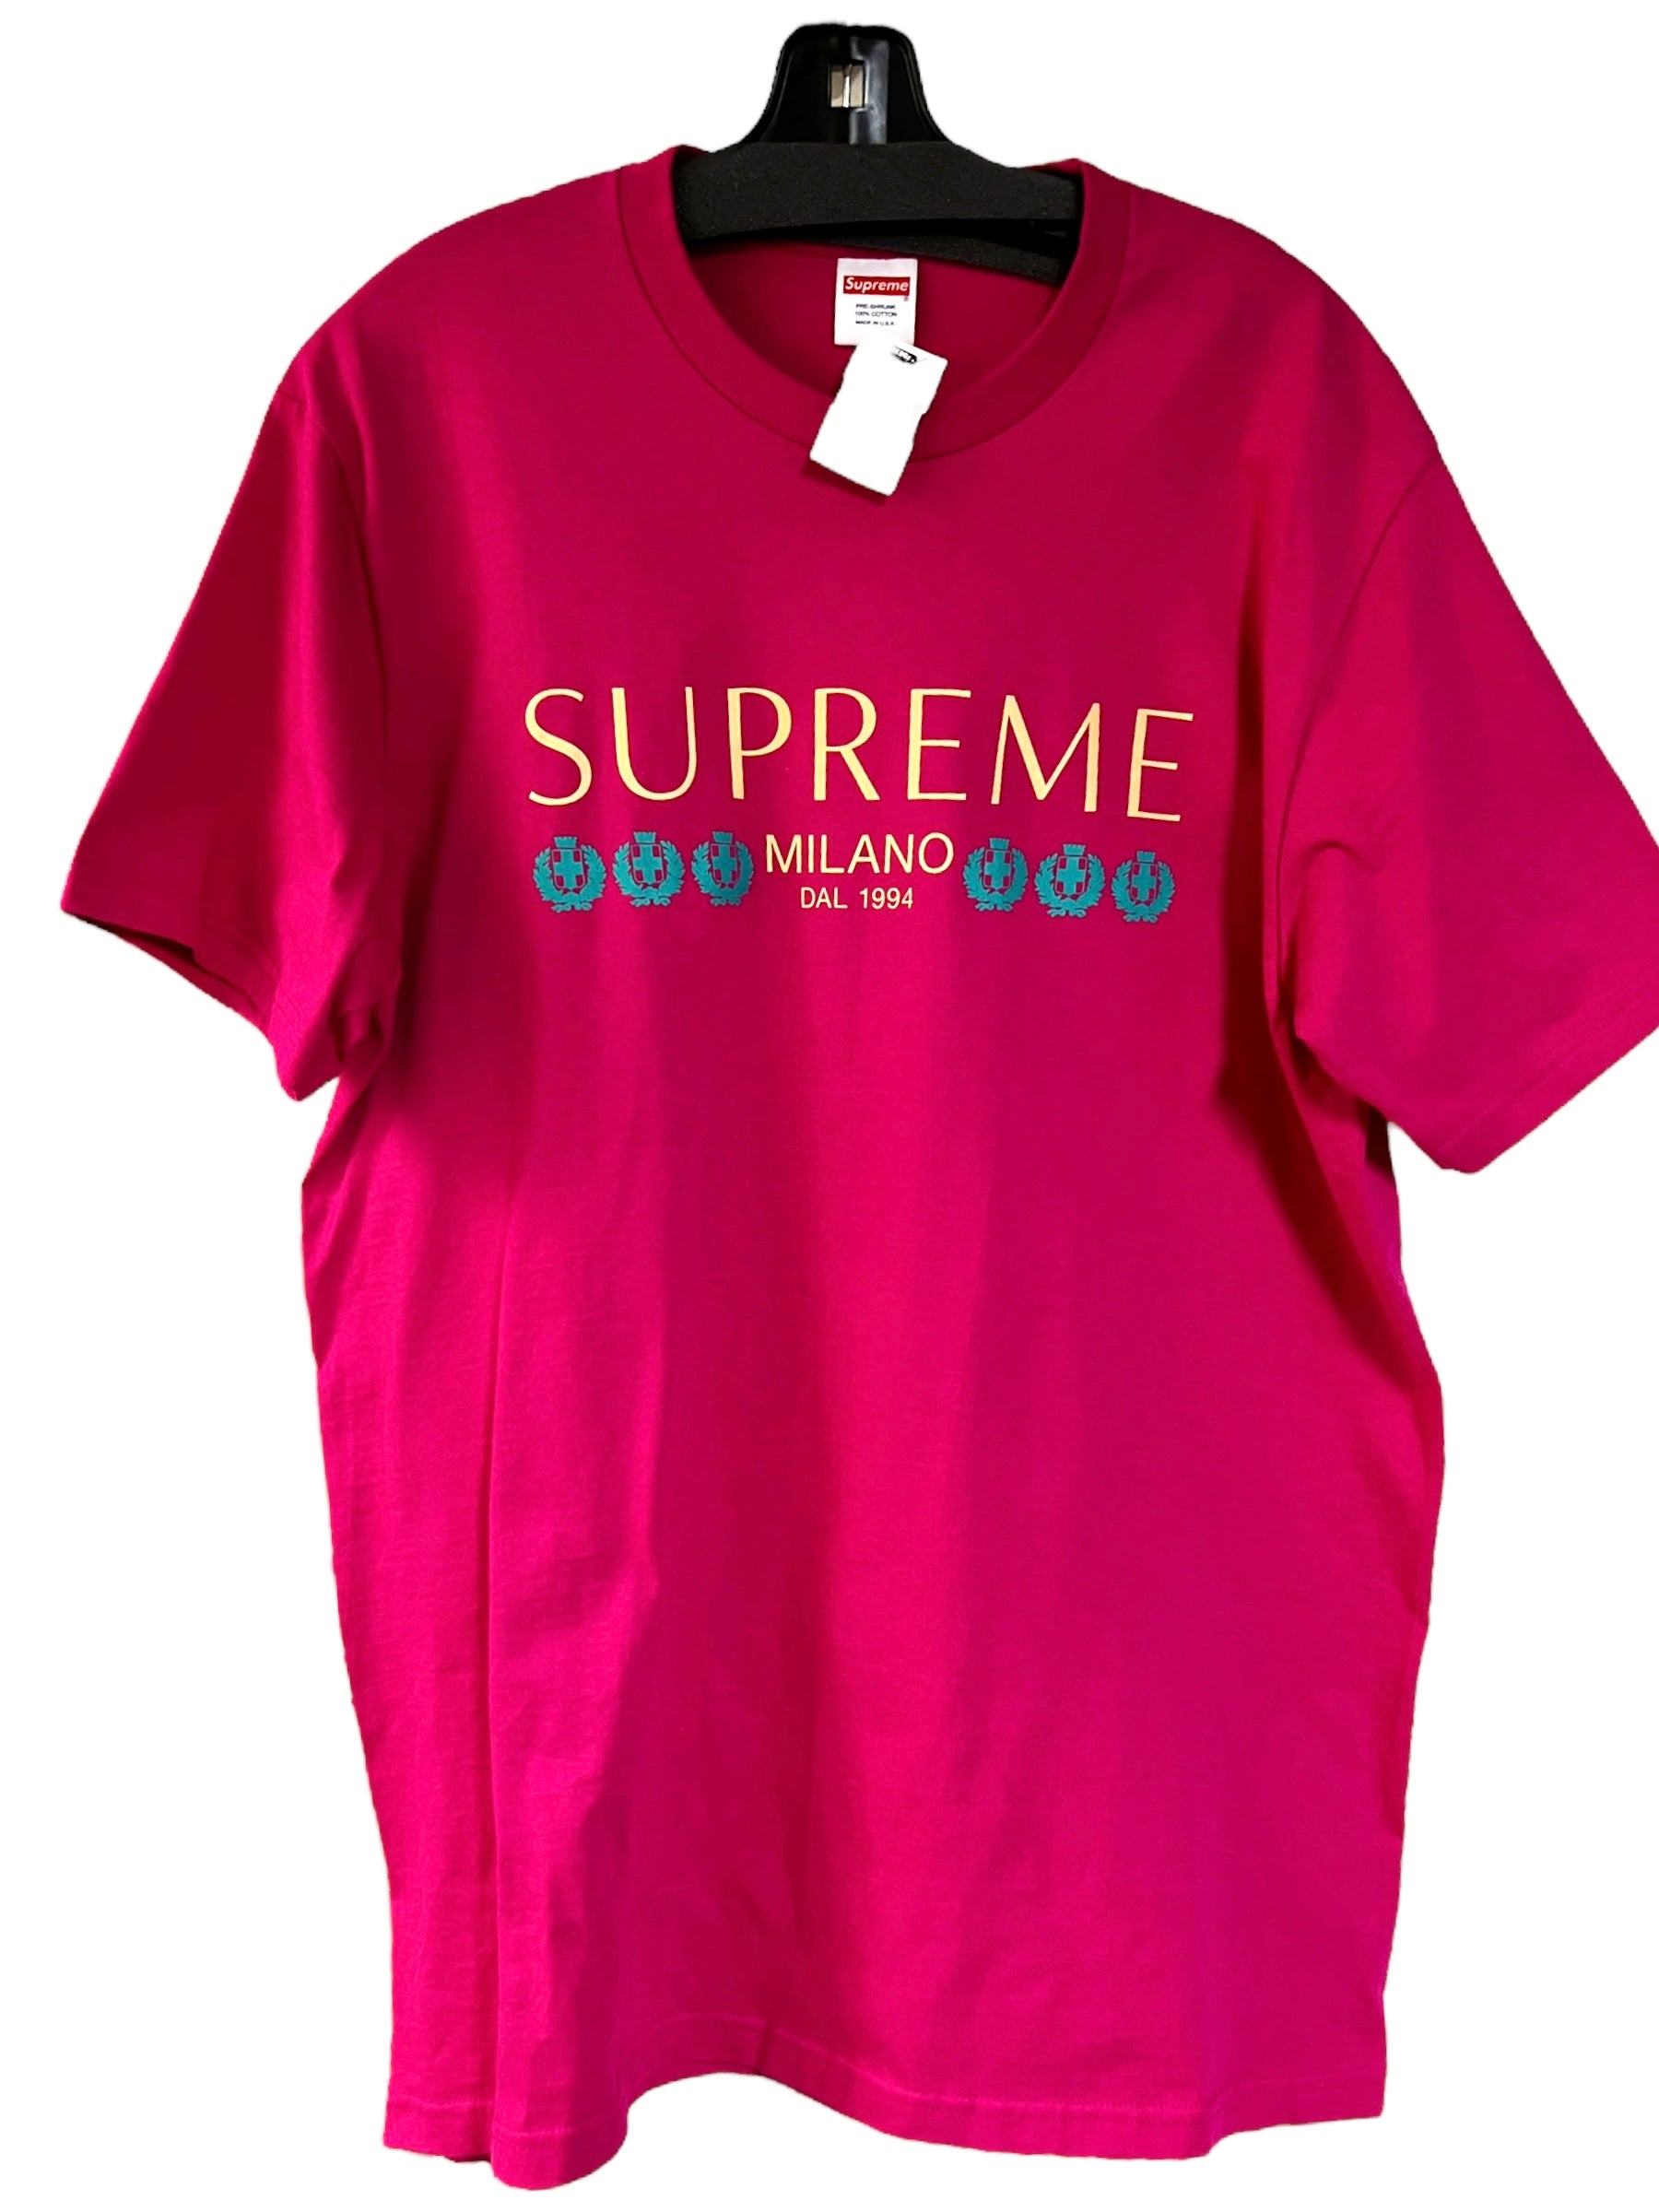 Supreme ‘Milano’ Pink Tee